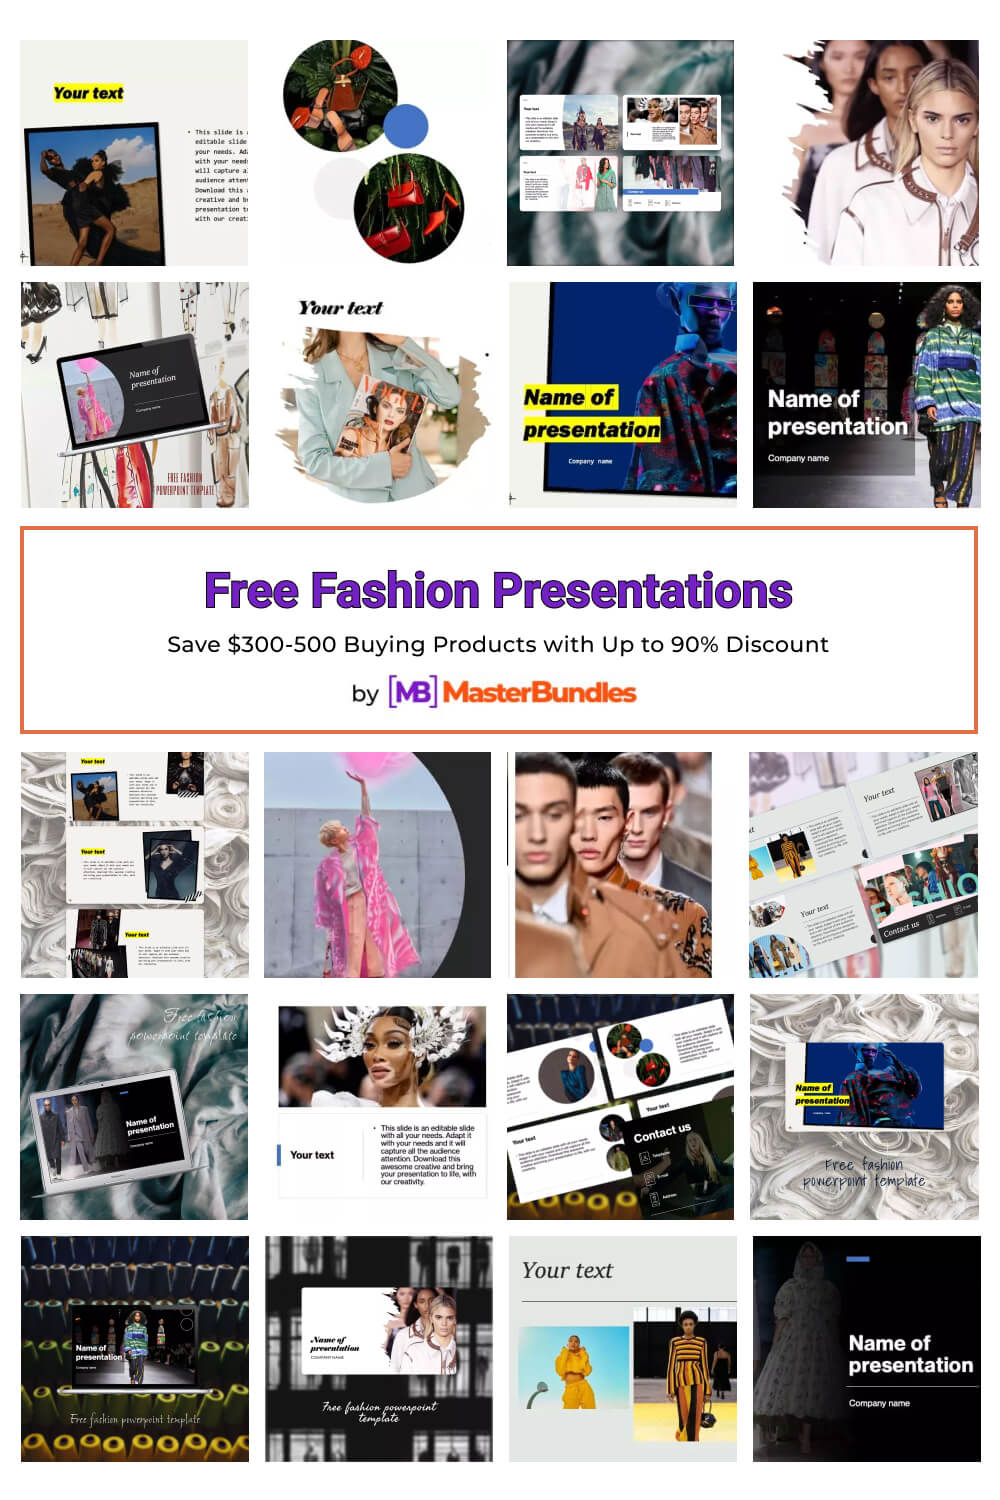 free fashion presentations pinterest image.